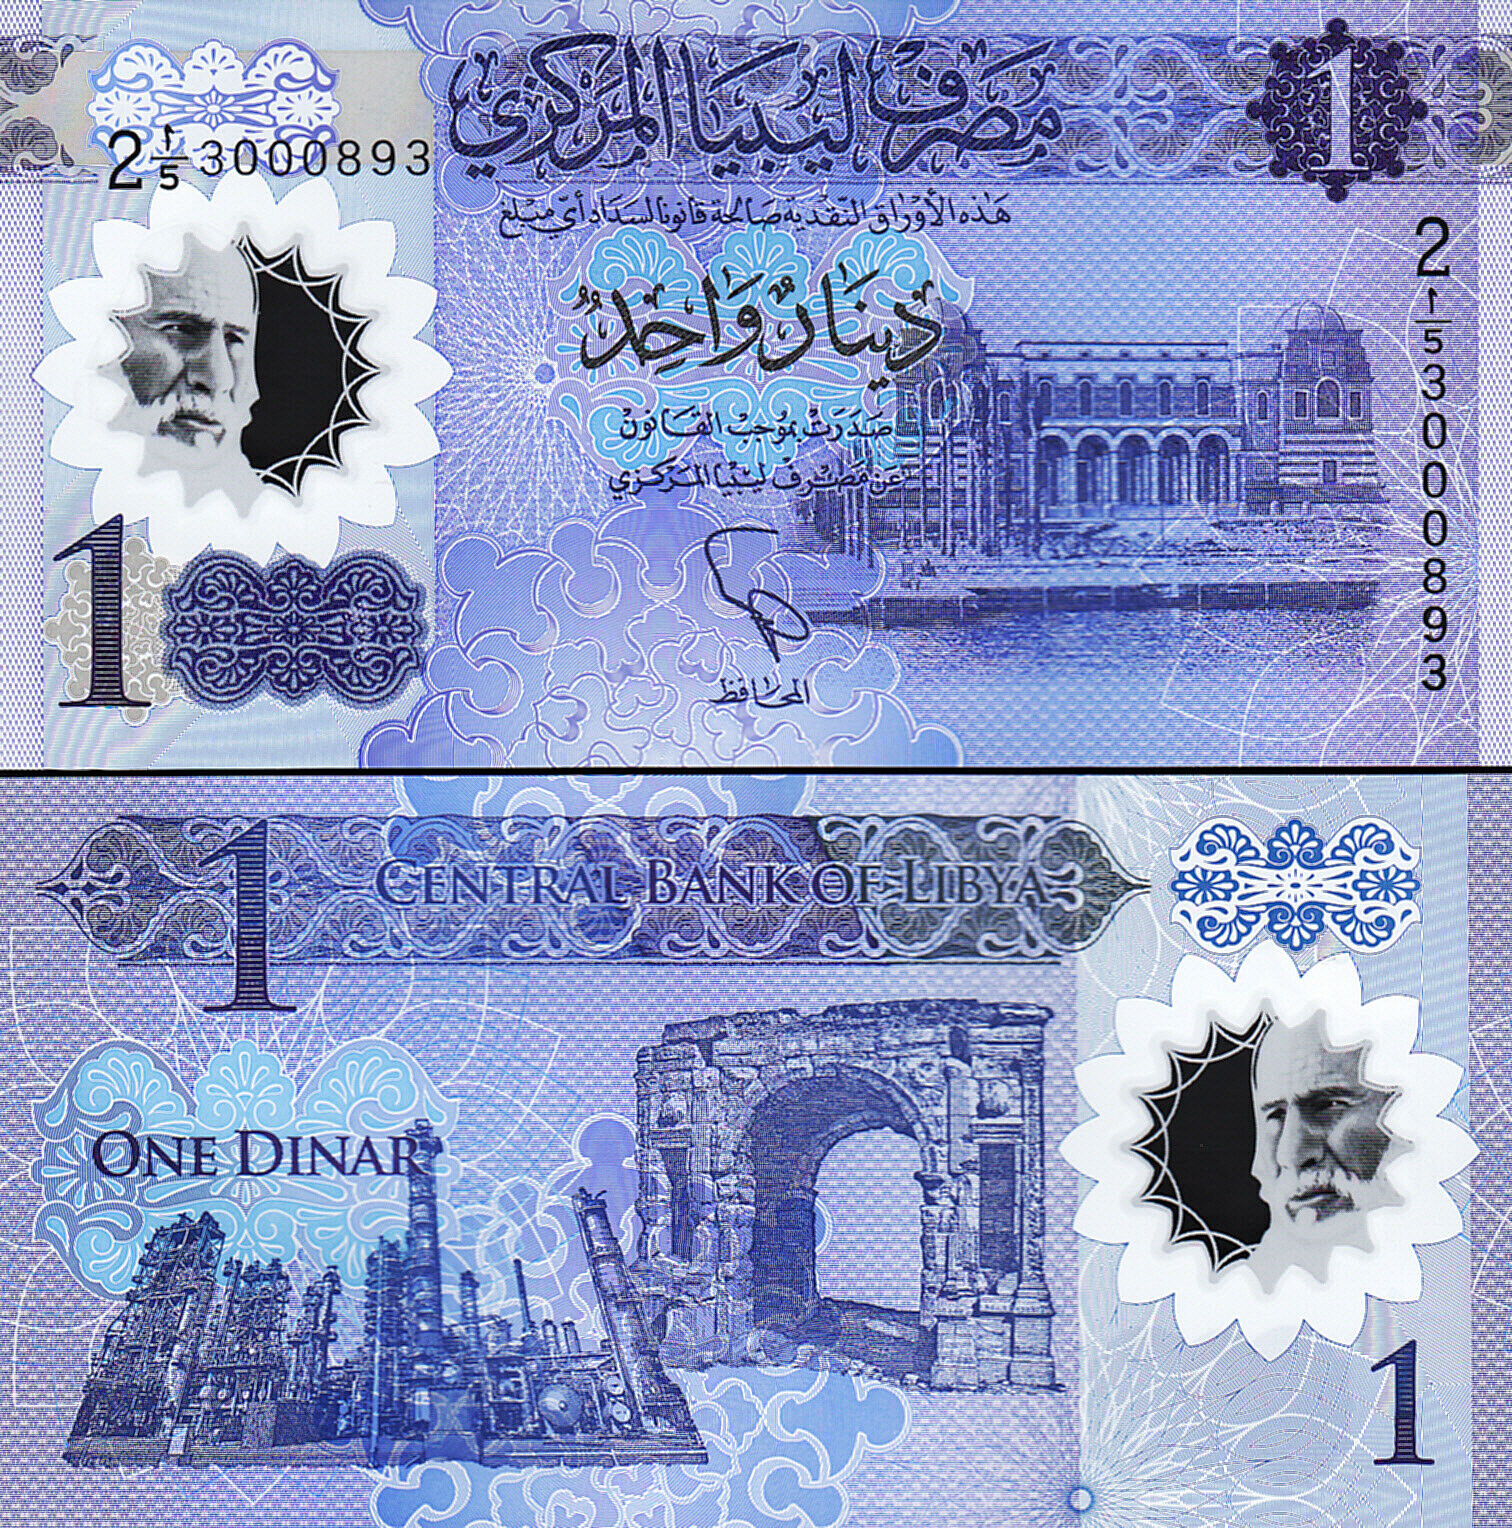 Libya 1 Dinar 2019, Unc, Polymer, P-new, New Design